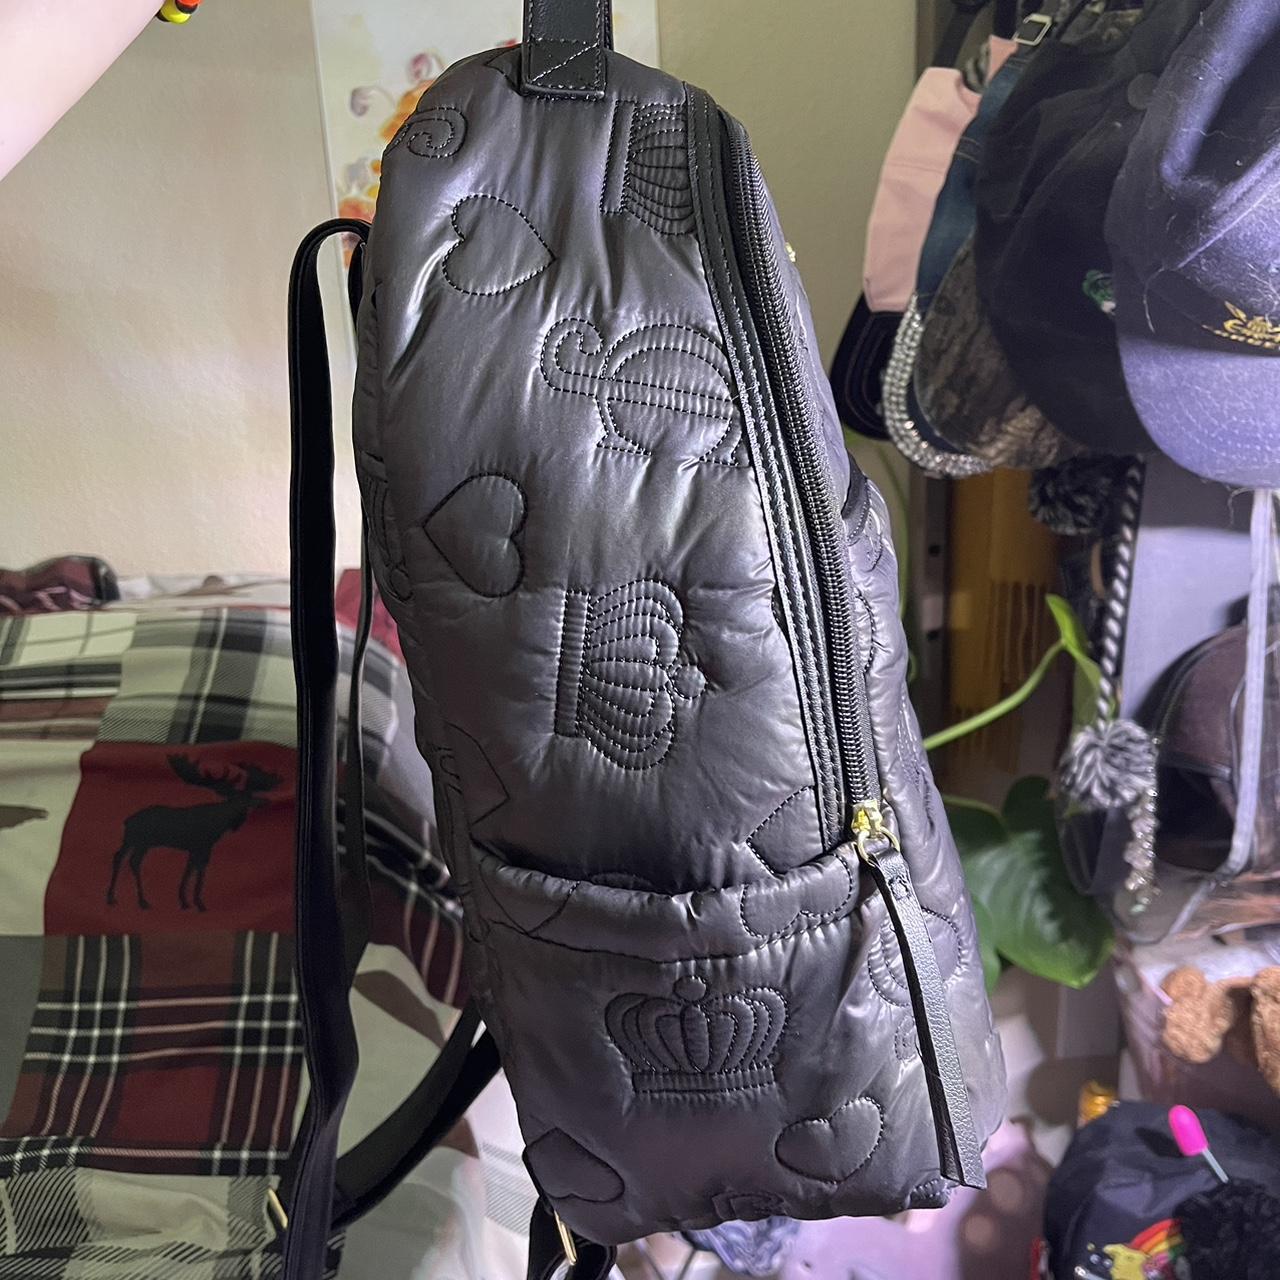 mini black backpack w/ gold hardware 🖤 worn a - Depop